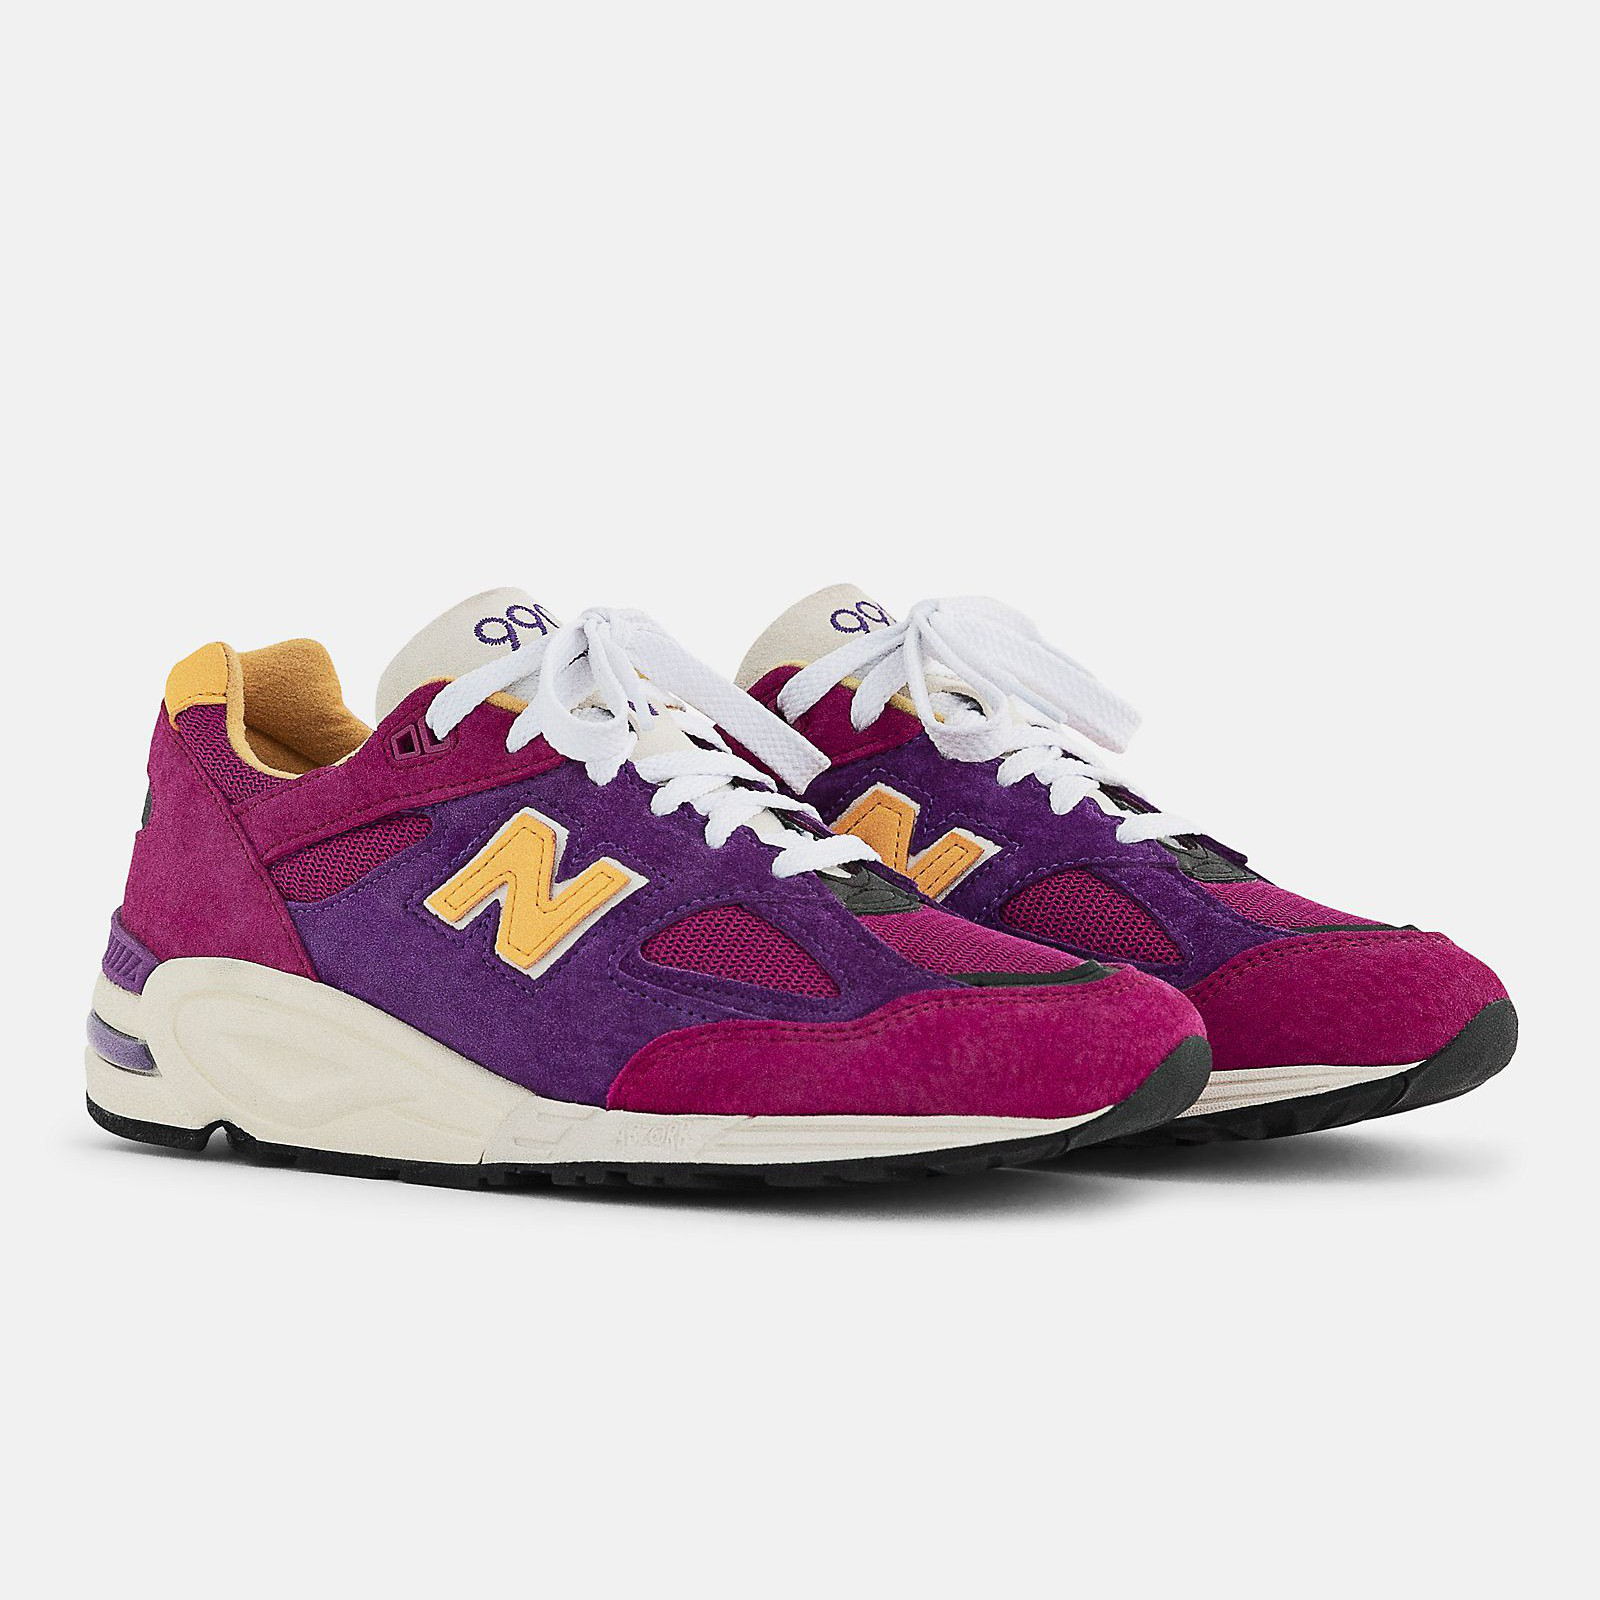 New Balance 990v2
Purple / Pink